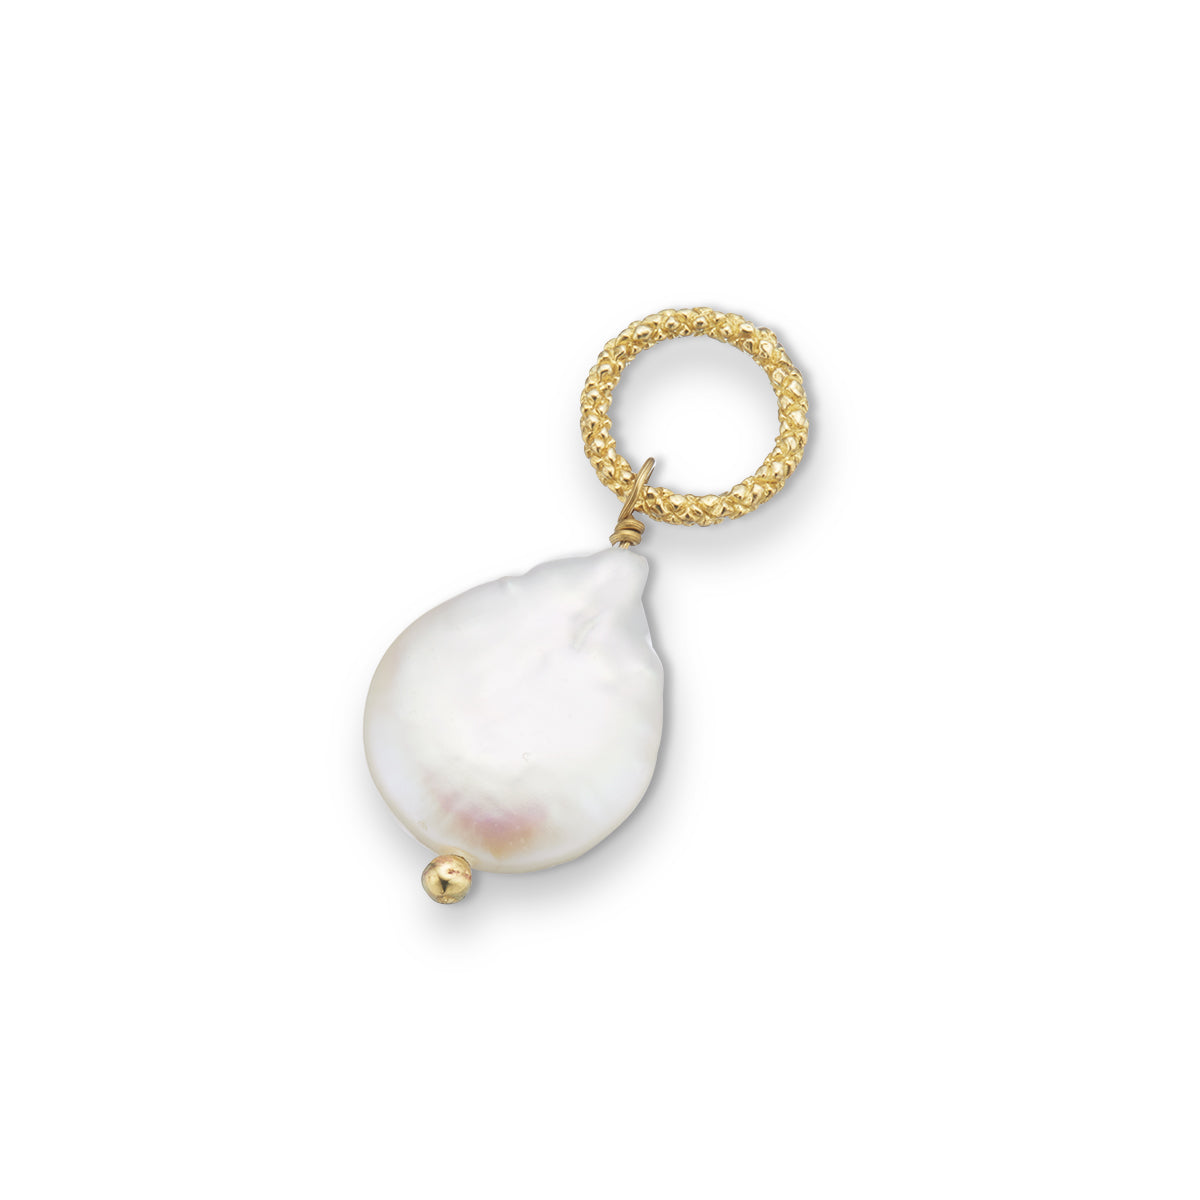 Ipanema baroque pearl charm